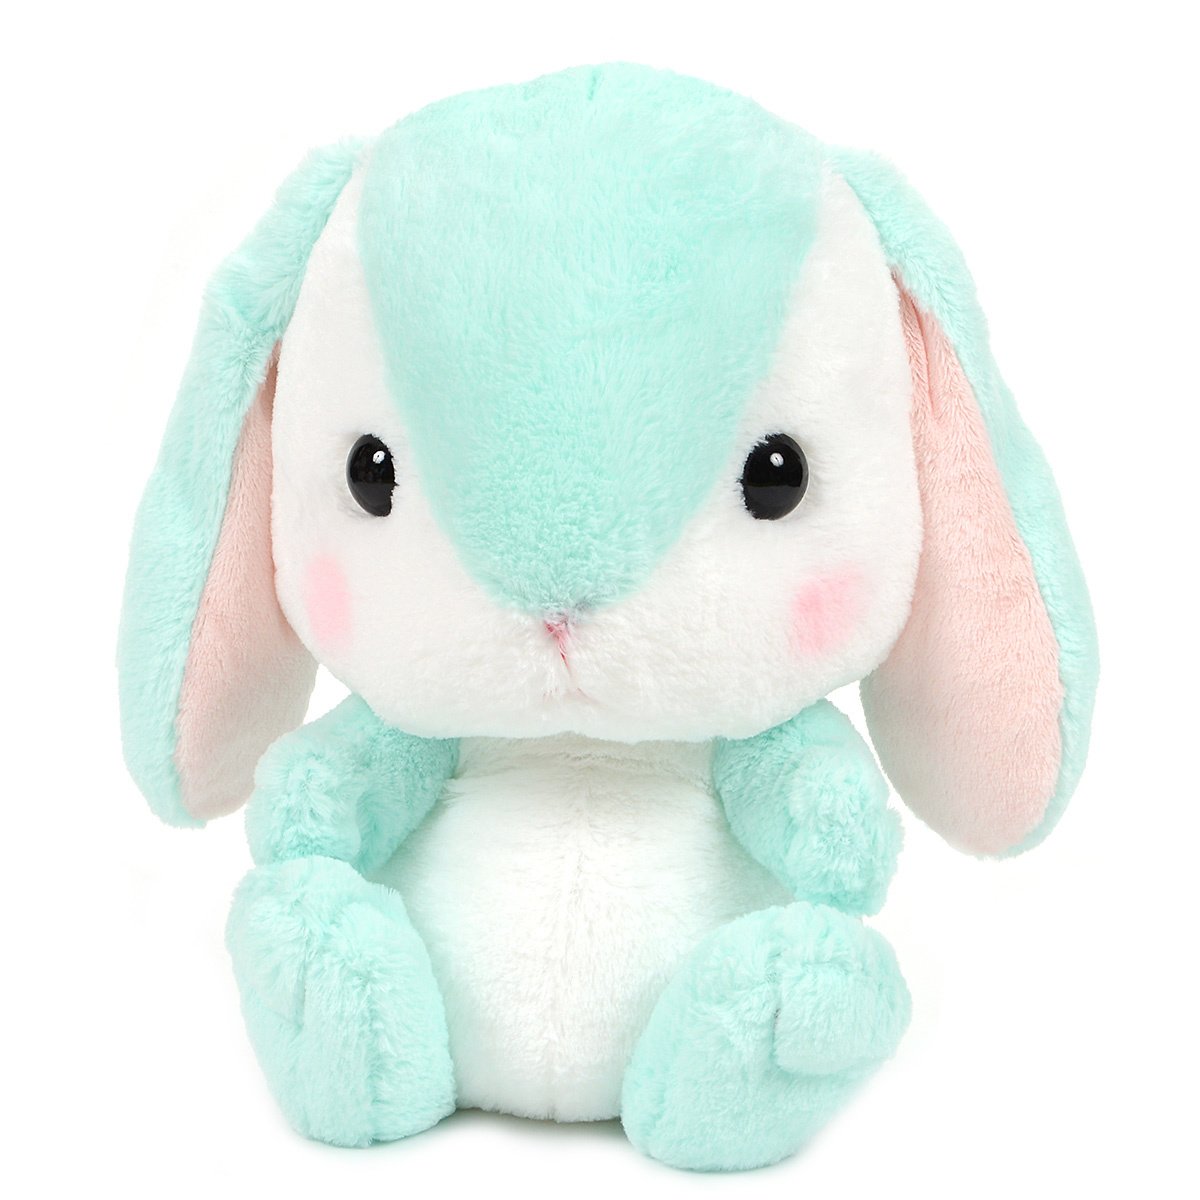 Amuse Bunny Plushie Cute Stuffed Animal Toy Green / White Big Size